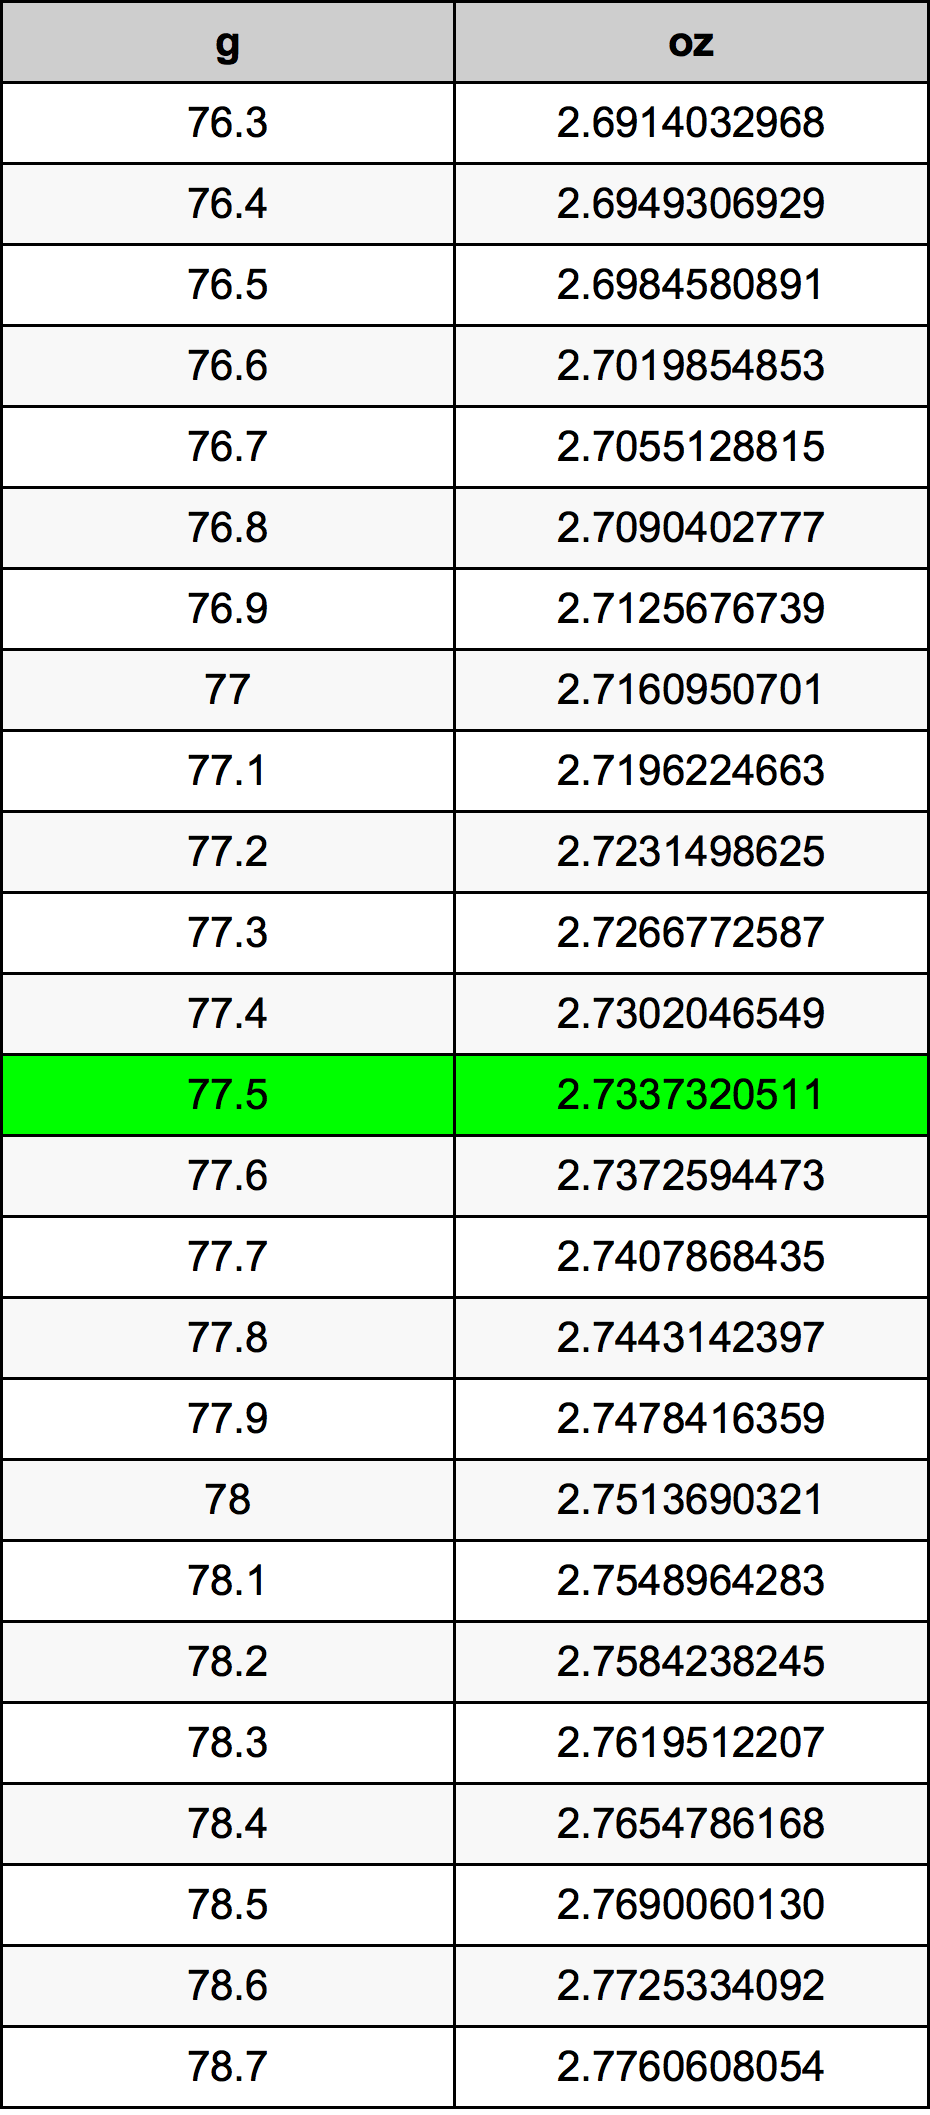 77.5 غرام جدول تحويل